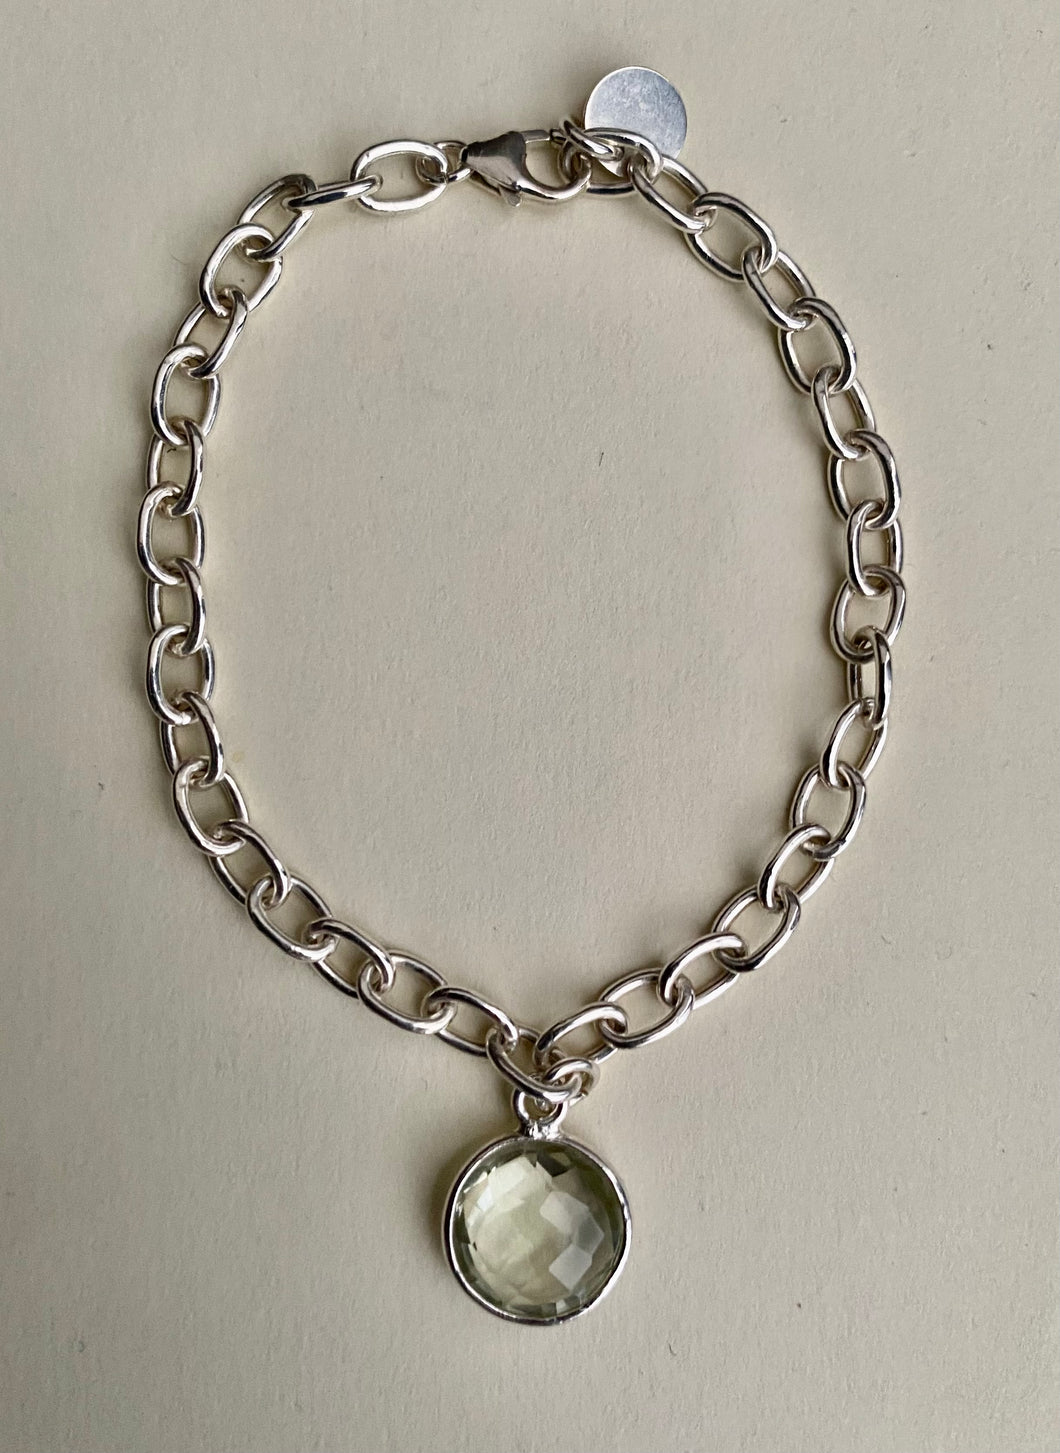 Stoney Chain bracelet